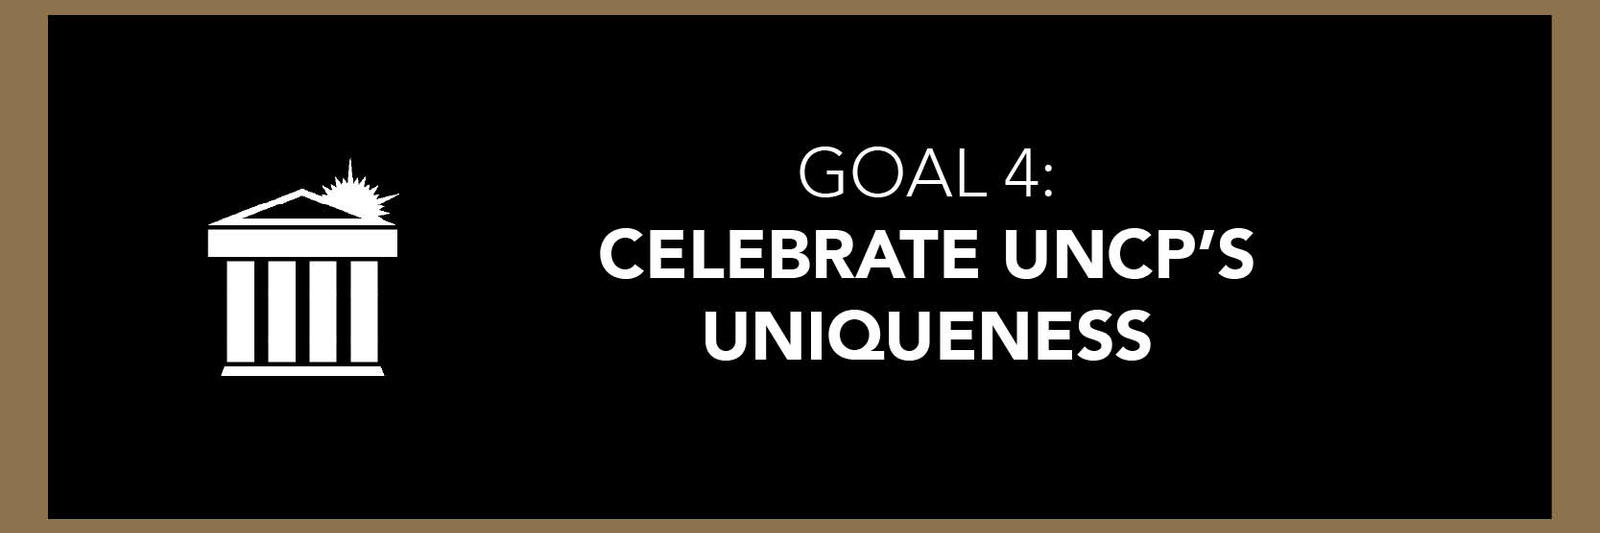 Goal 4: Celebrate UNCP's Uniqueness